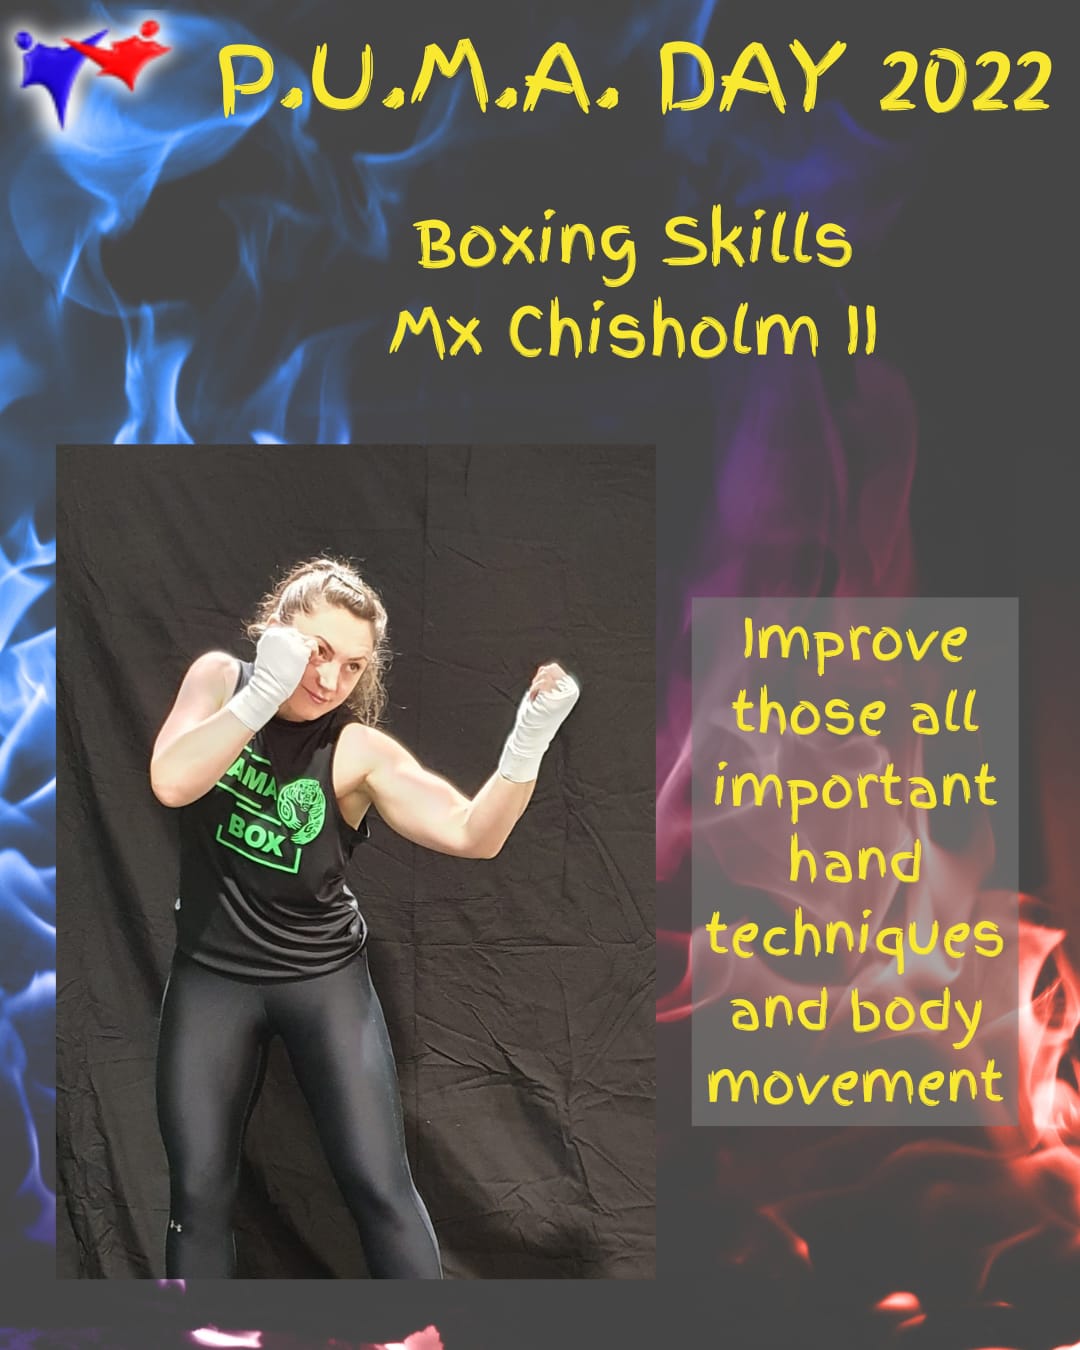 PUMA Day Boxing skills with Mx Chisholm